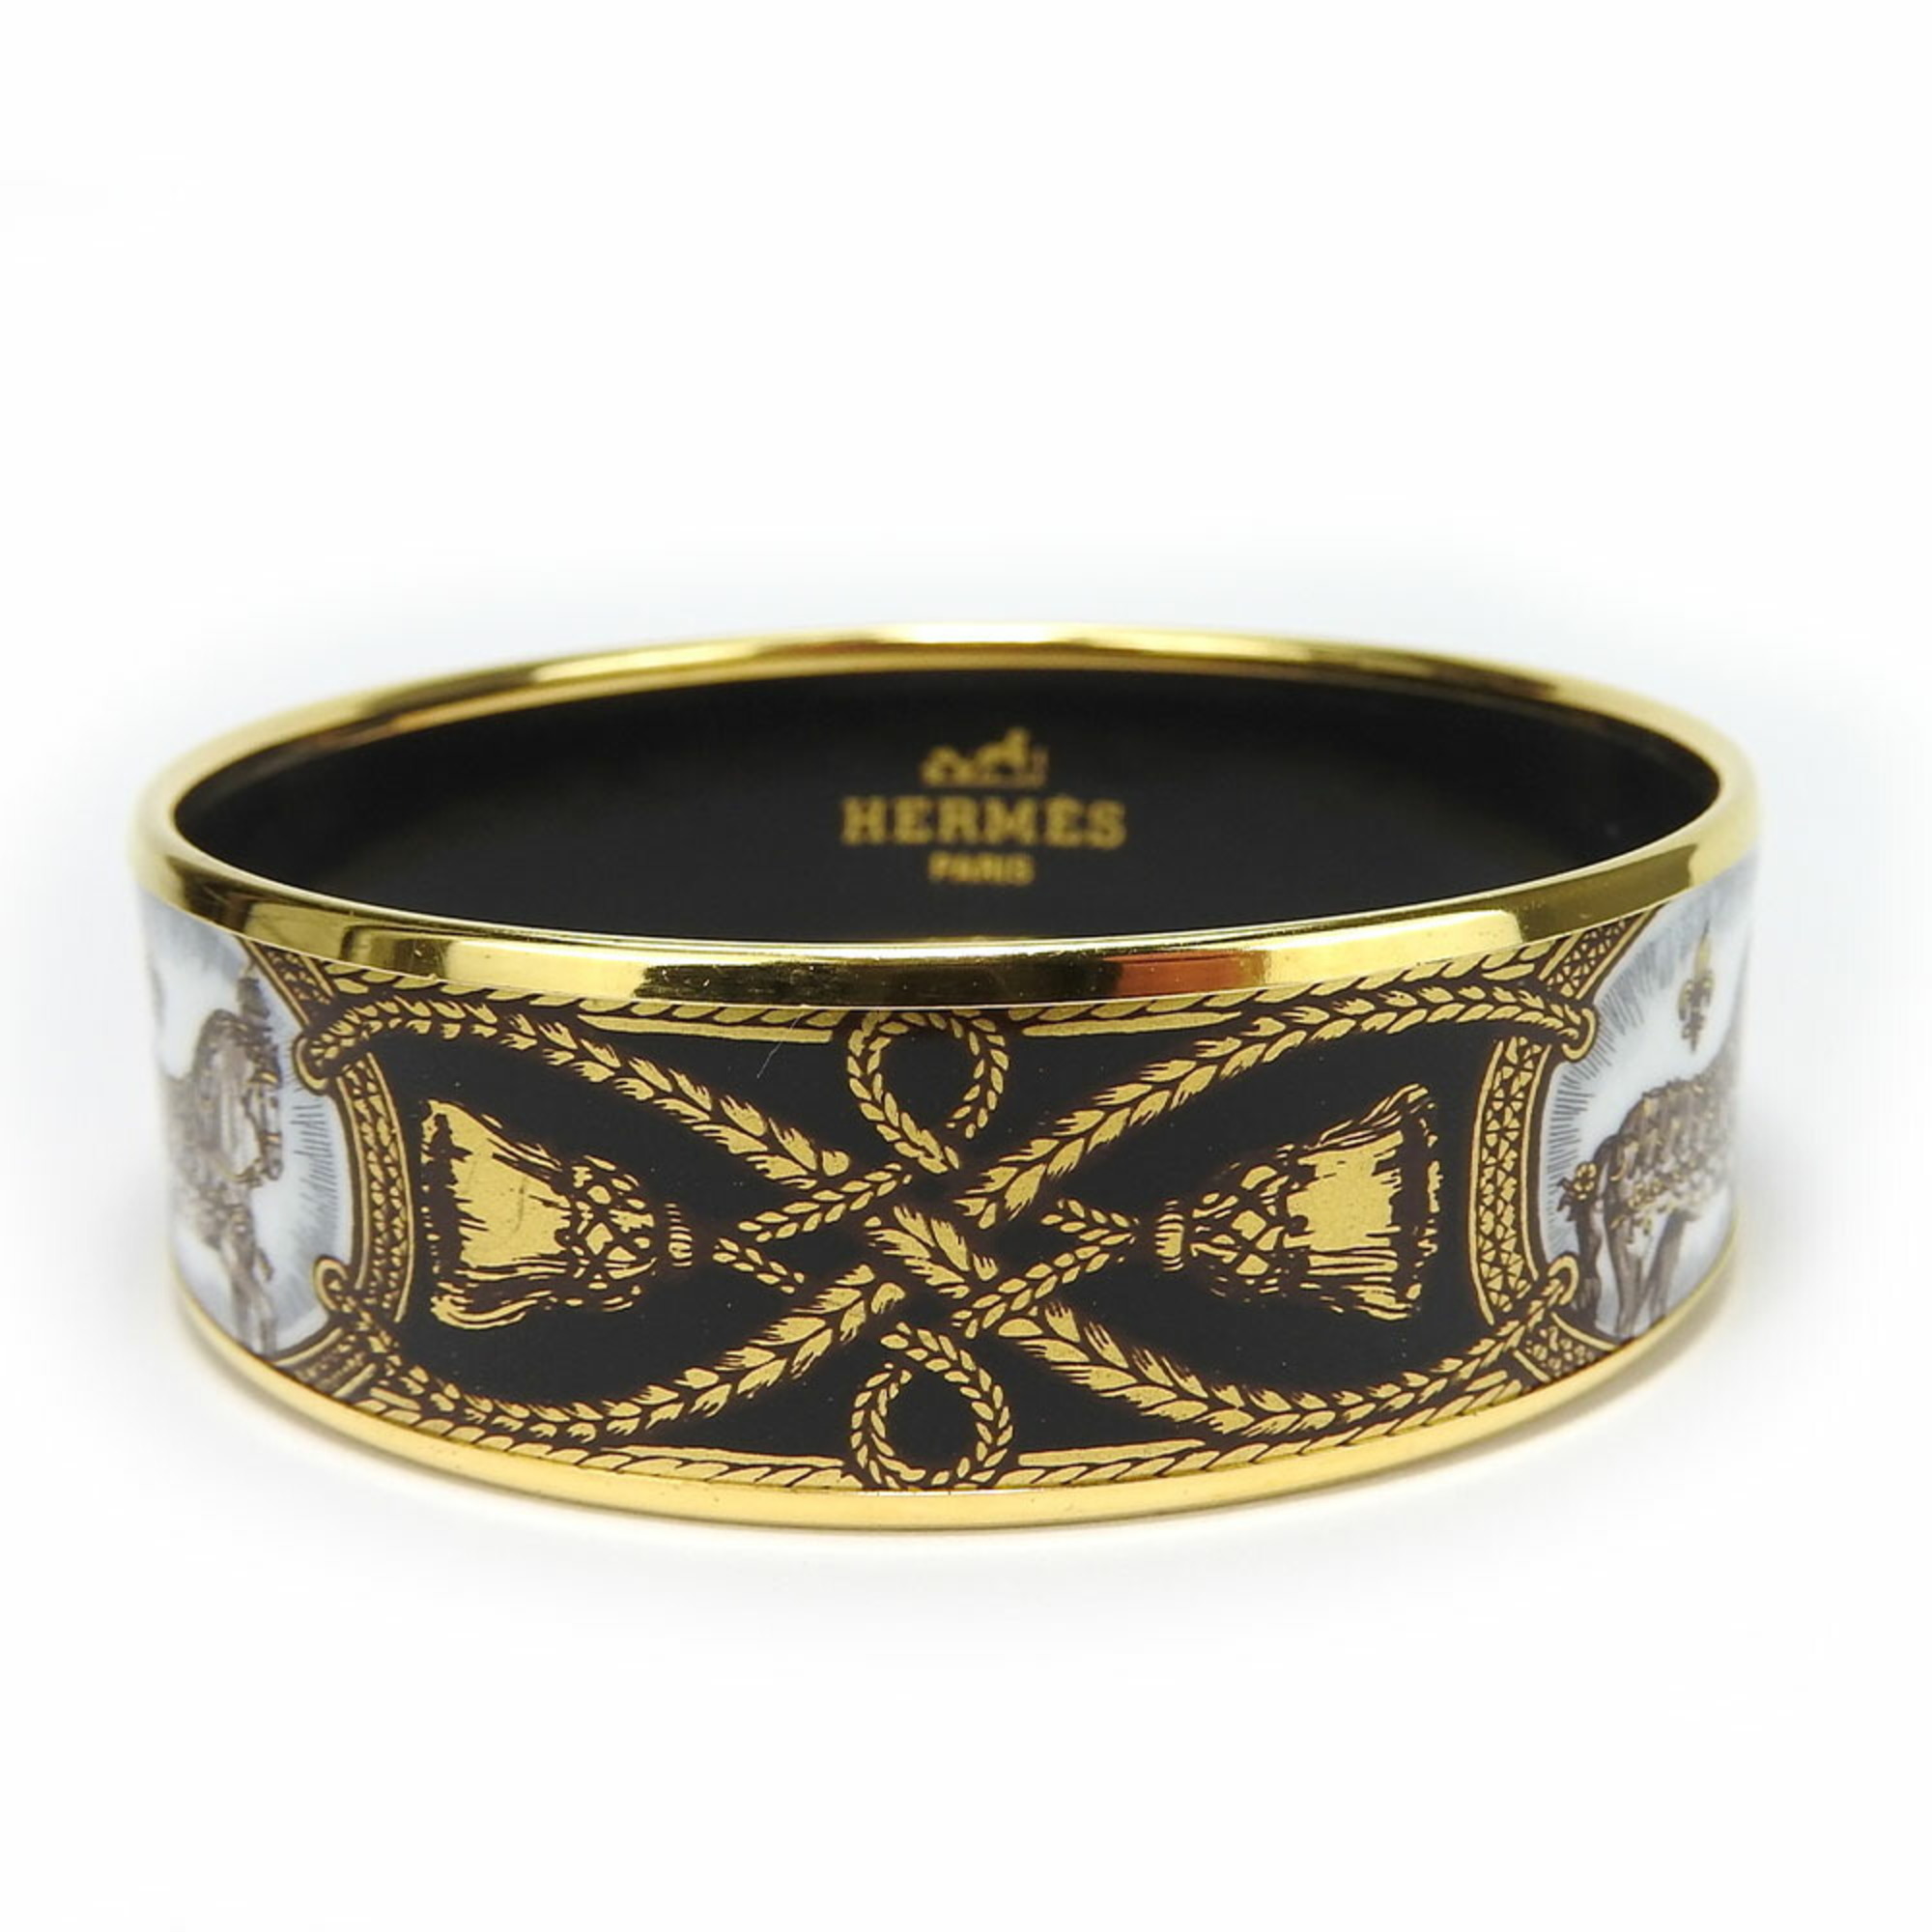 Hermes bracelet enamel GM metal cloisonné multicolor gold black horse women's HERMES